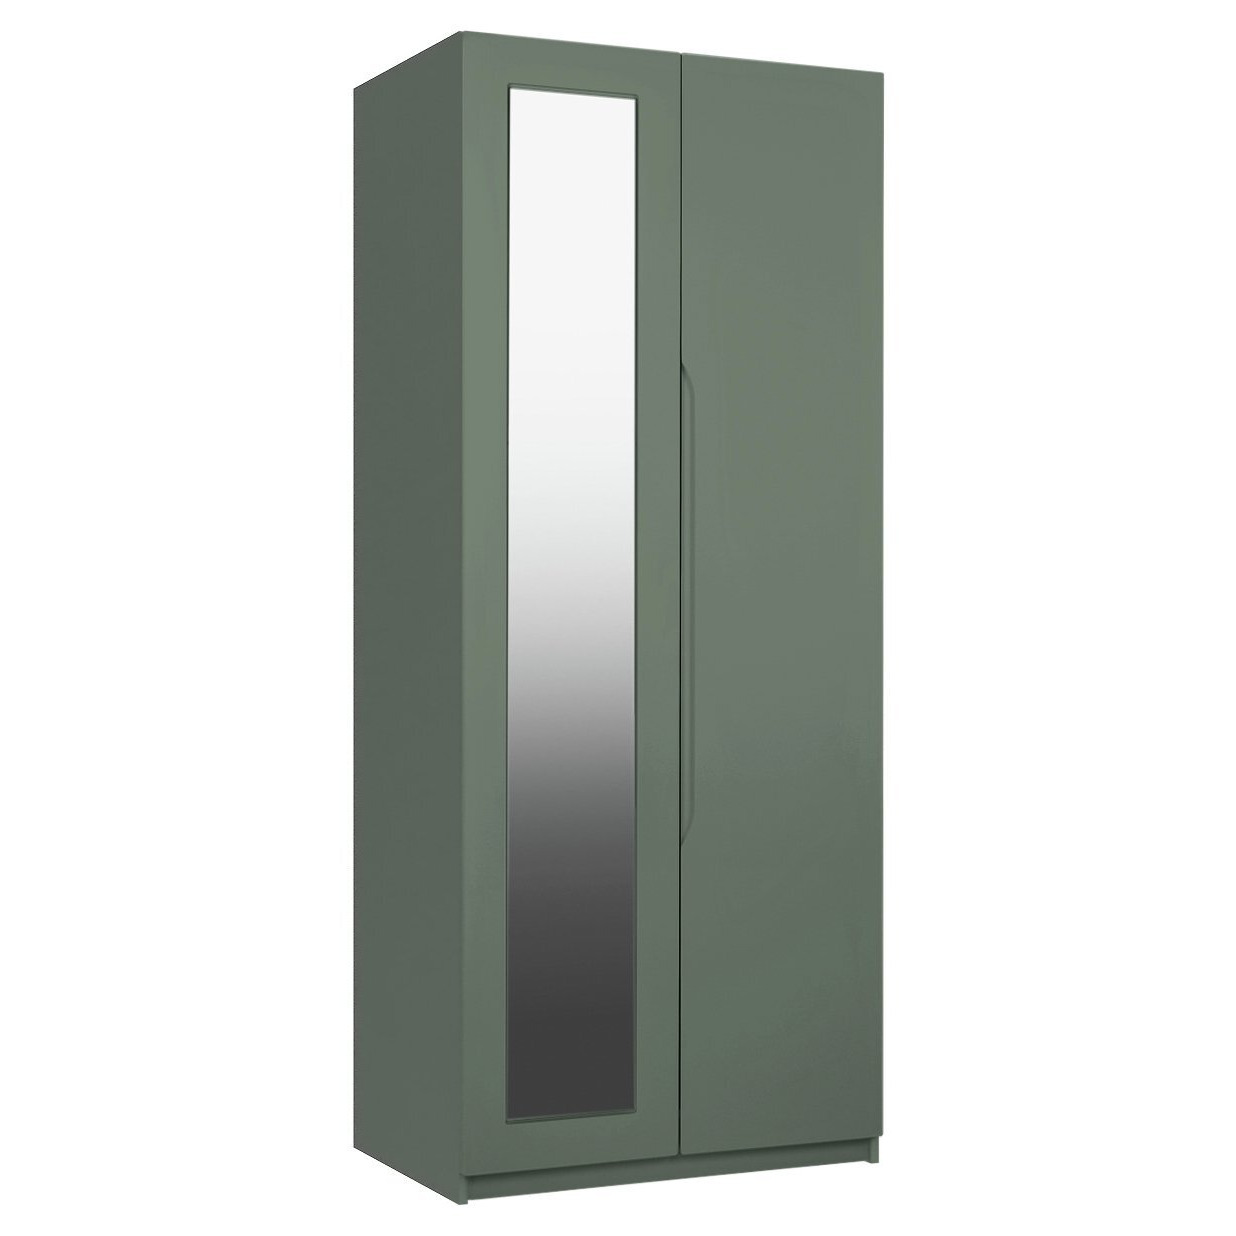 Legato 2 Door Mirrored Wardrobe - Green - image 1